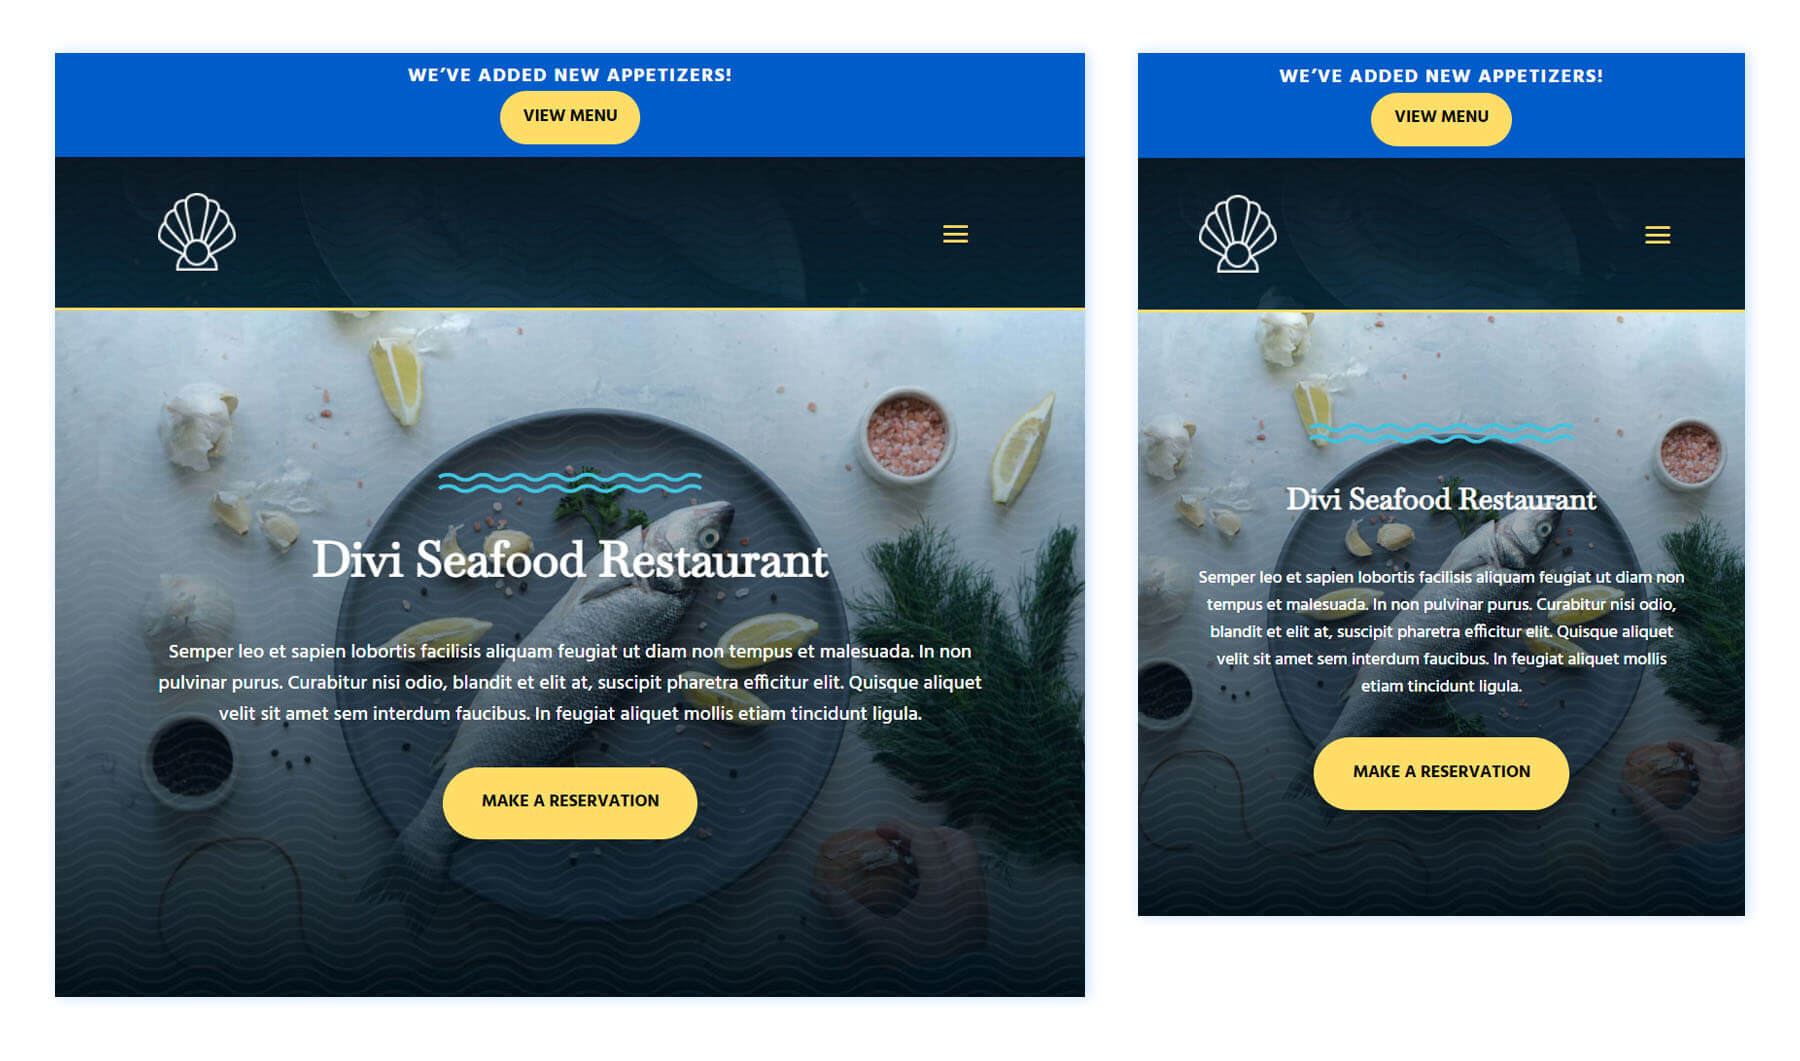 Divi Seafood Restaurant Header design tablet and mobile view